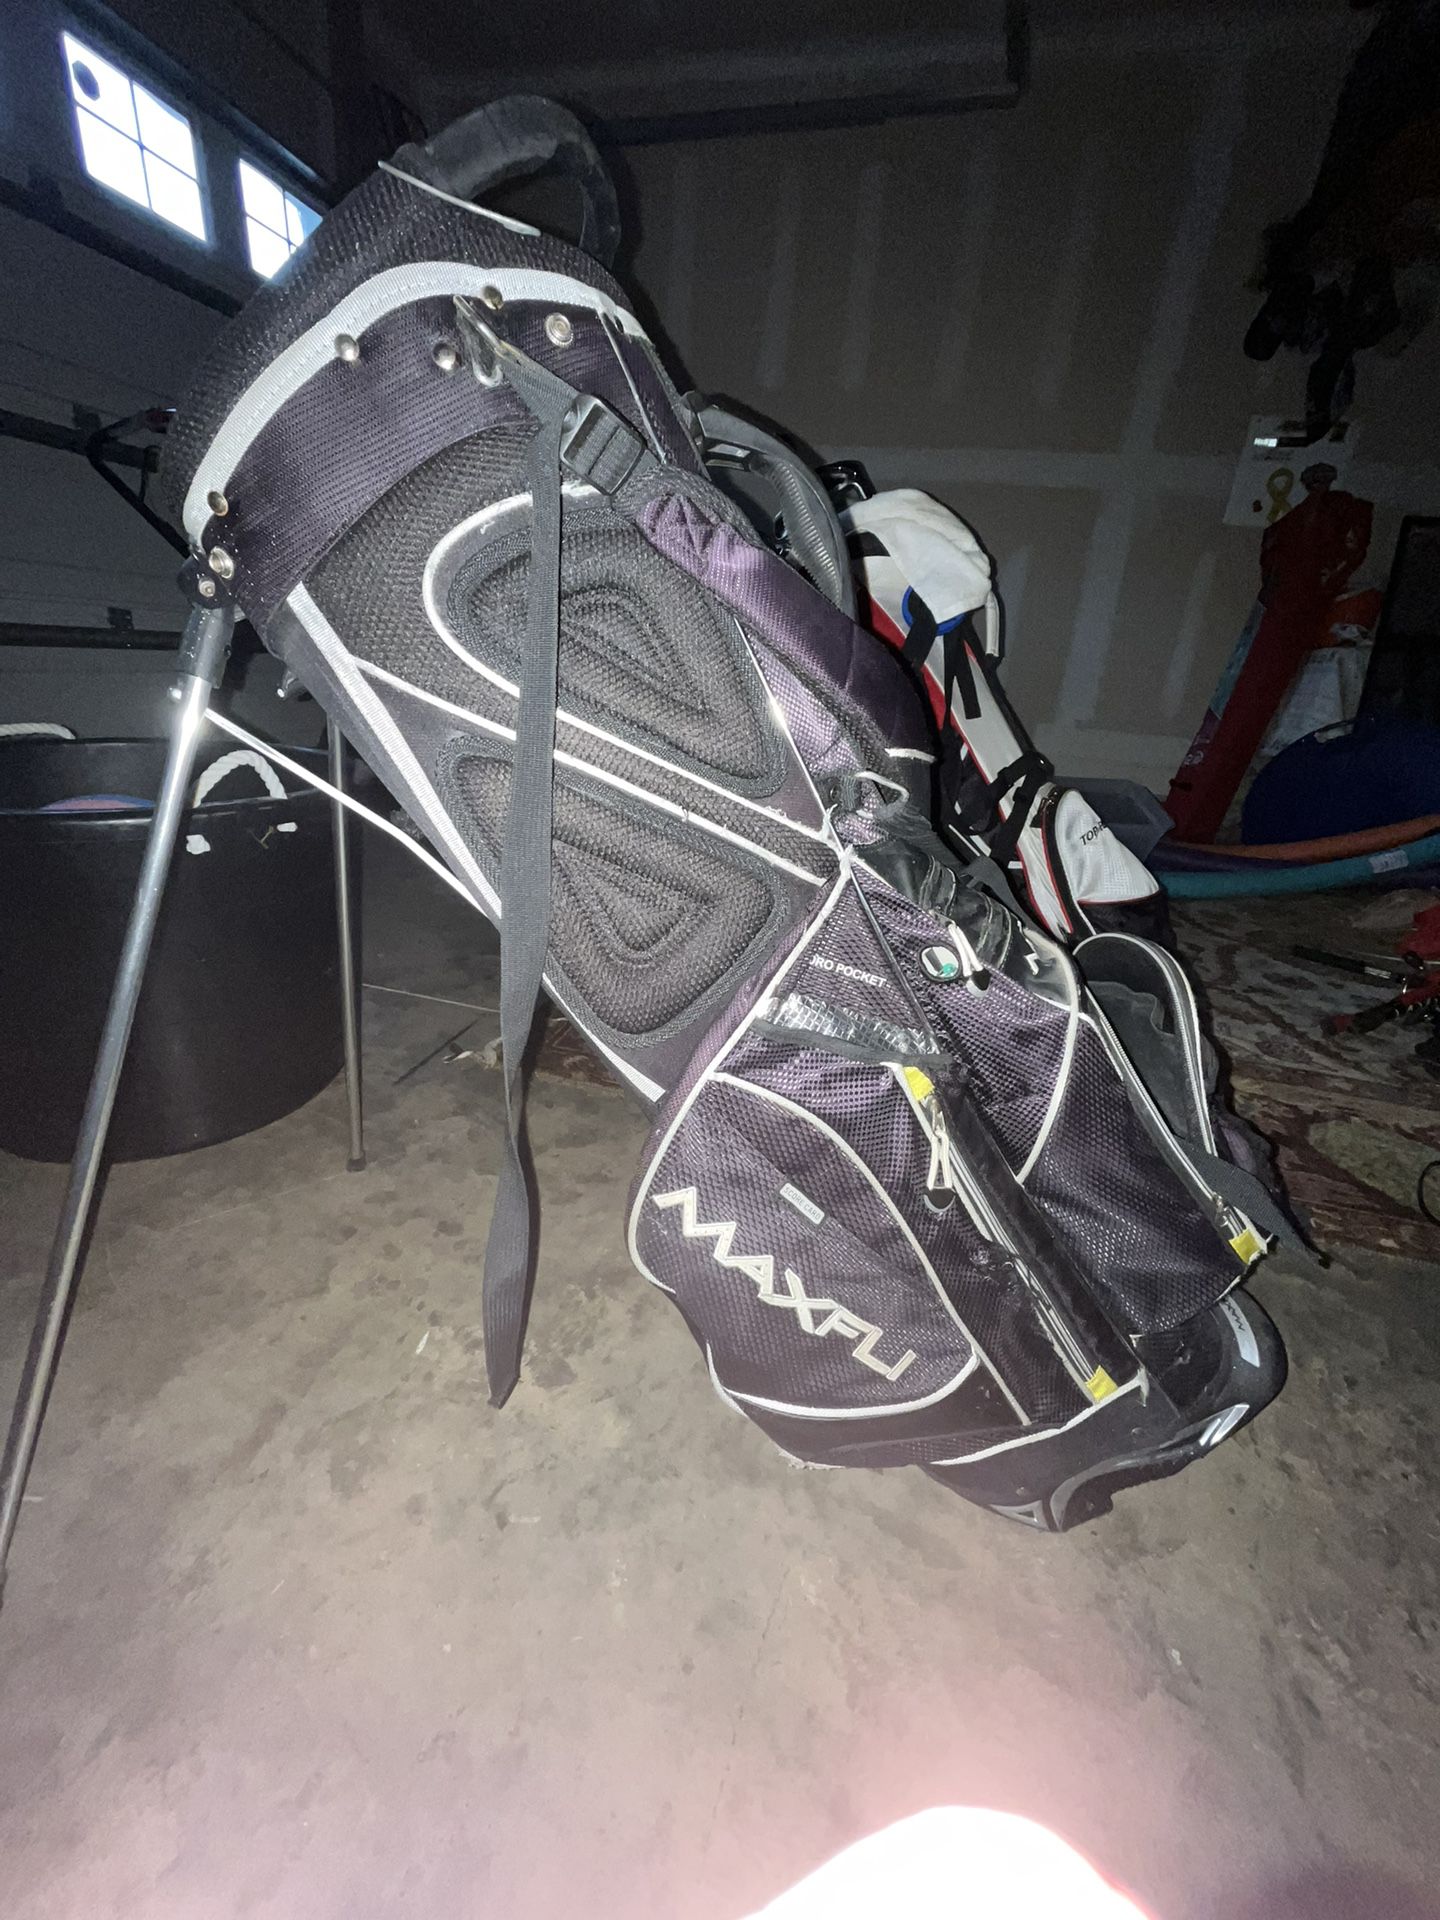 Maxfli Golf Bag